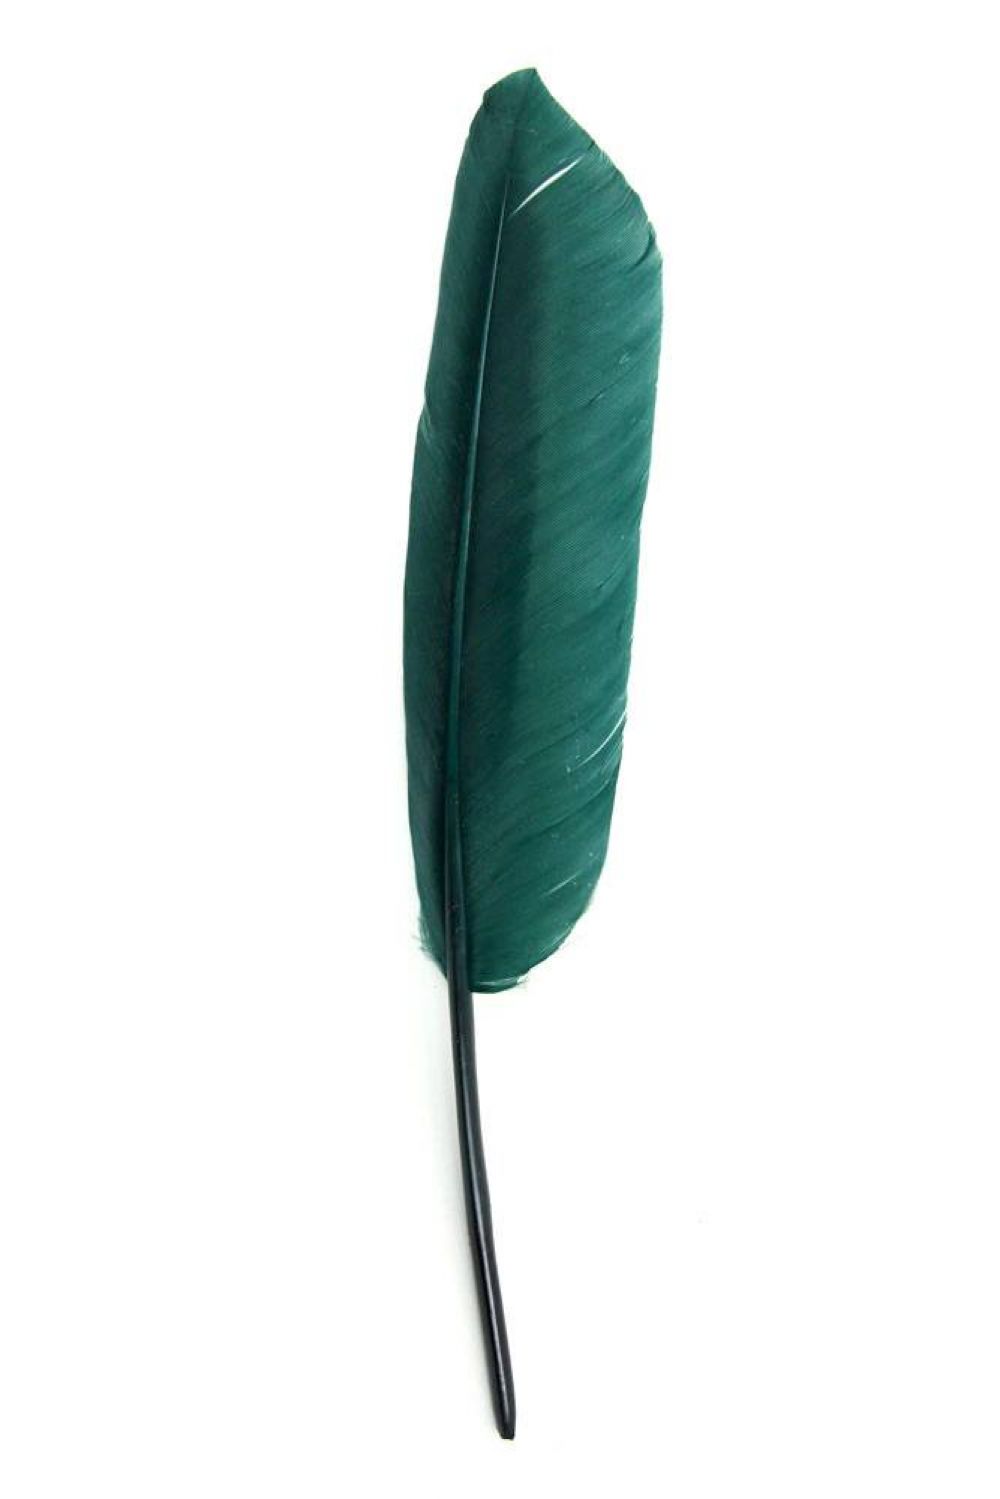 Gänsefeder 22-27cm, dunkelgrün, rechts, 10er Pack